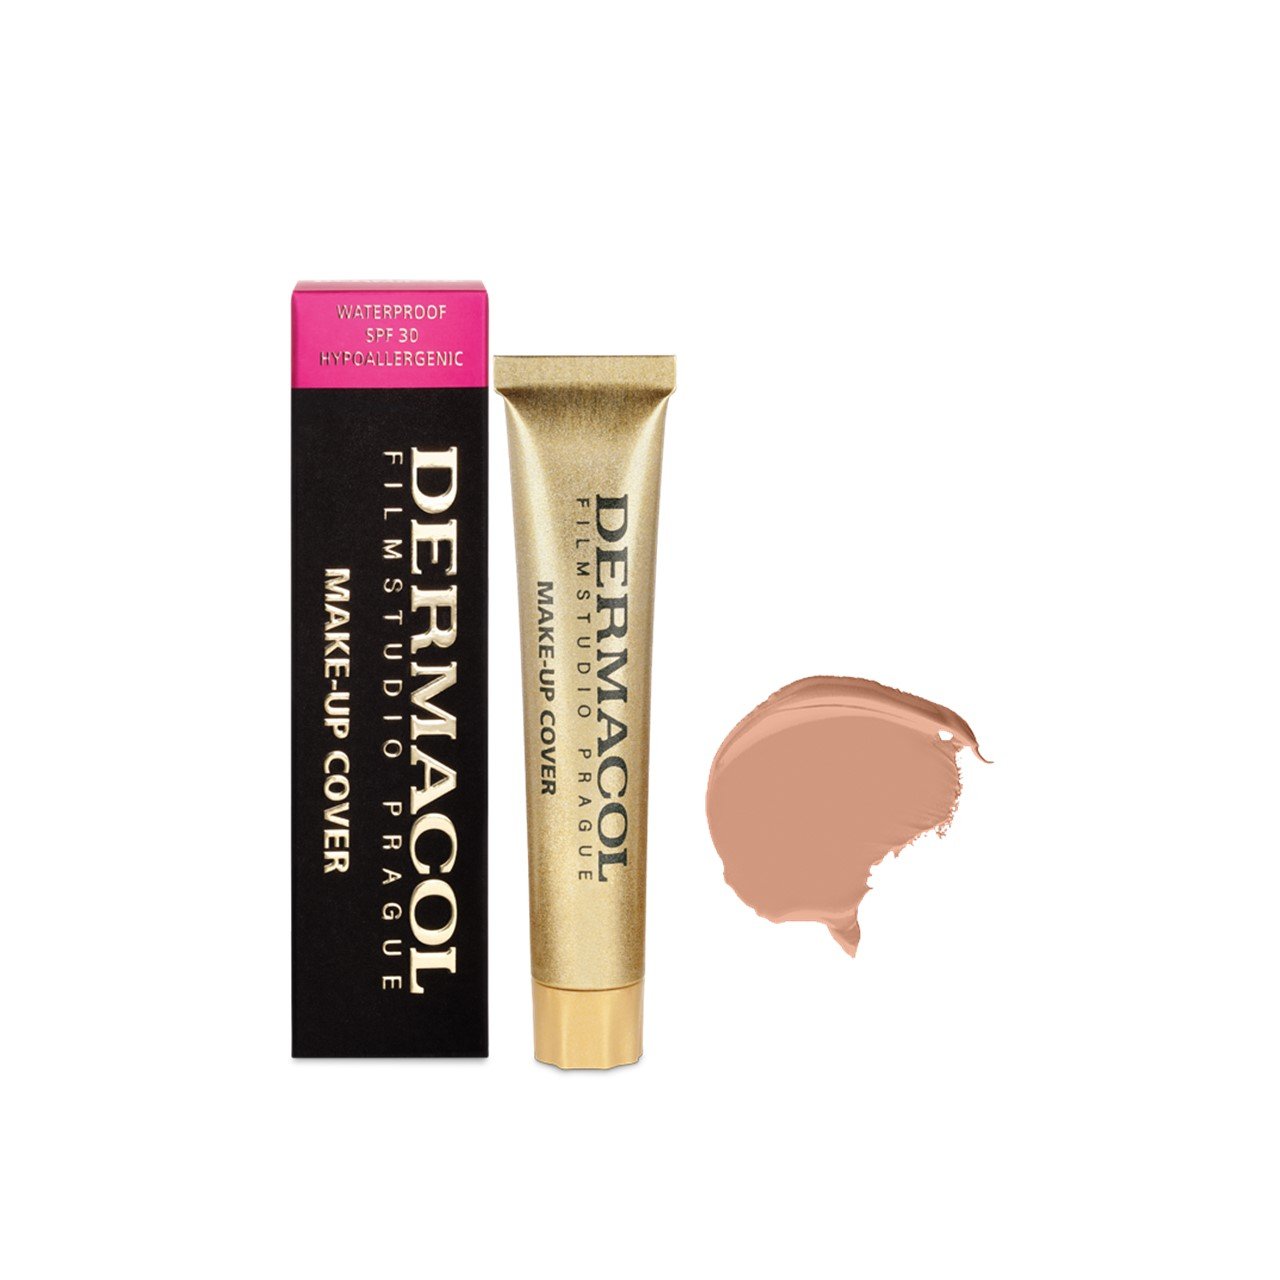 Dermacol Make-Up Cover Foundation SPF30 215 30g